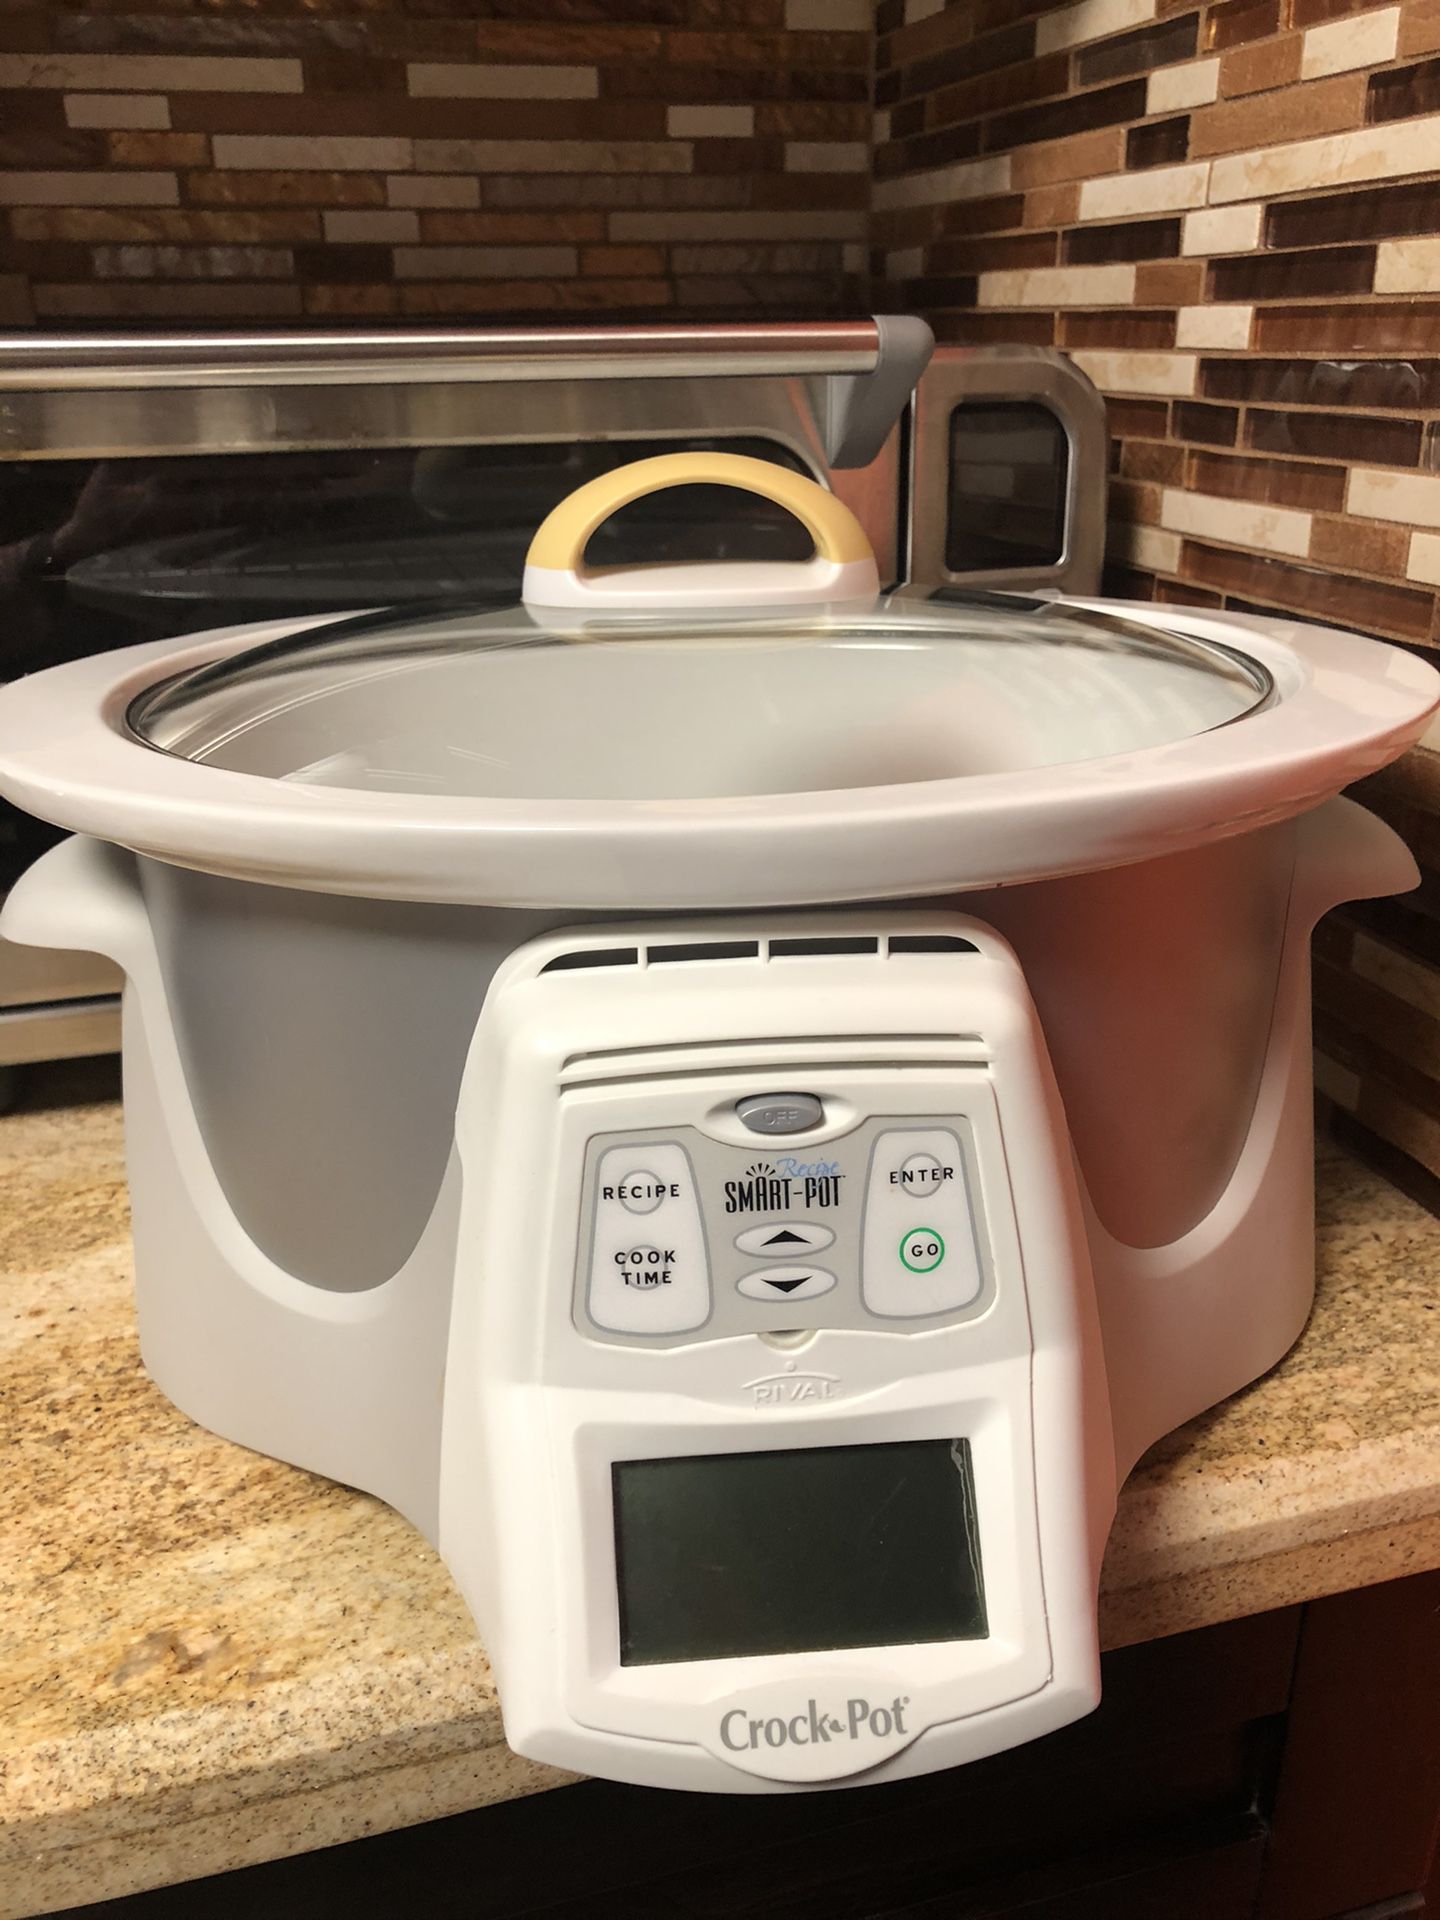 Crock Pot Digital Slow Cooker with Pre Programmed Recipes